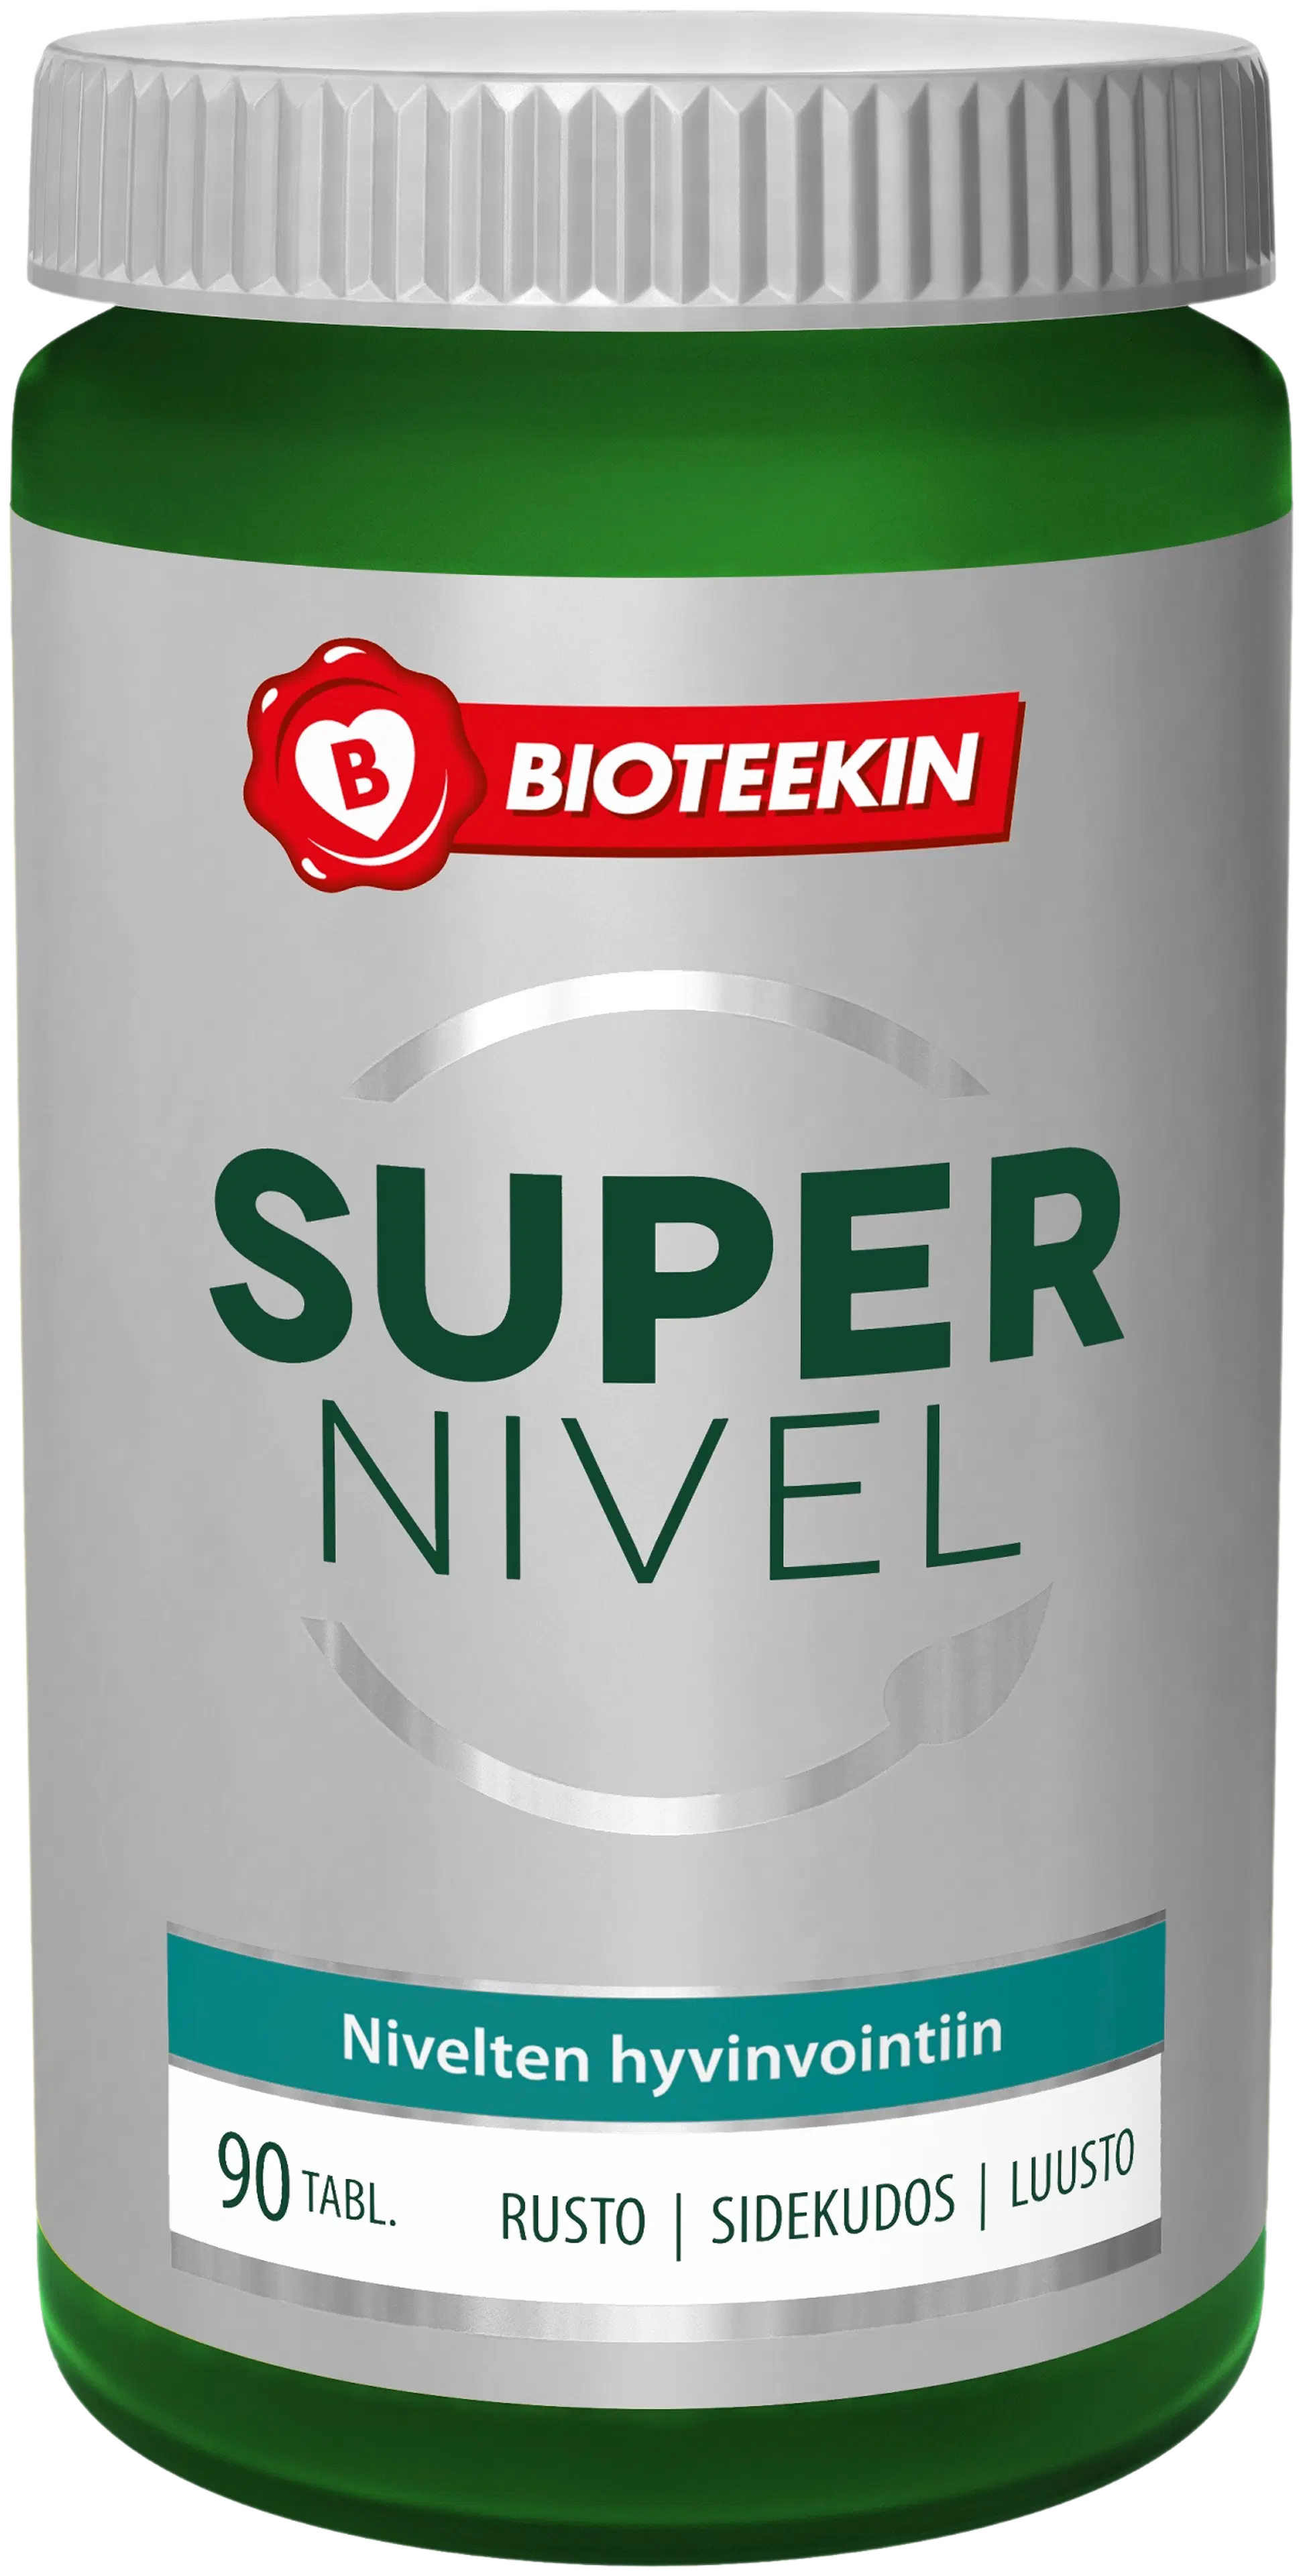 Bioteekki Super Nivel ravintolisä 90 tabl.